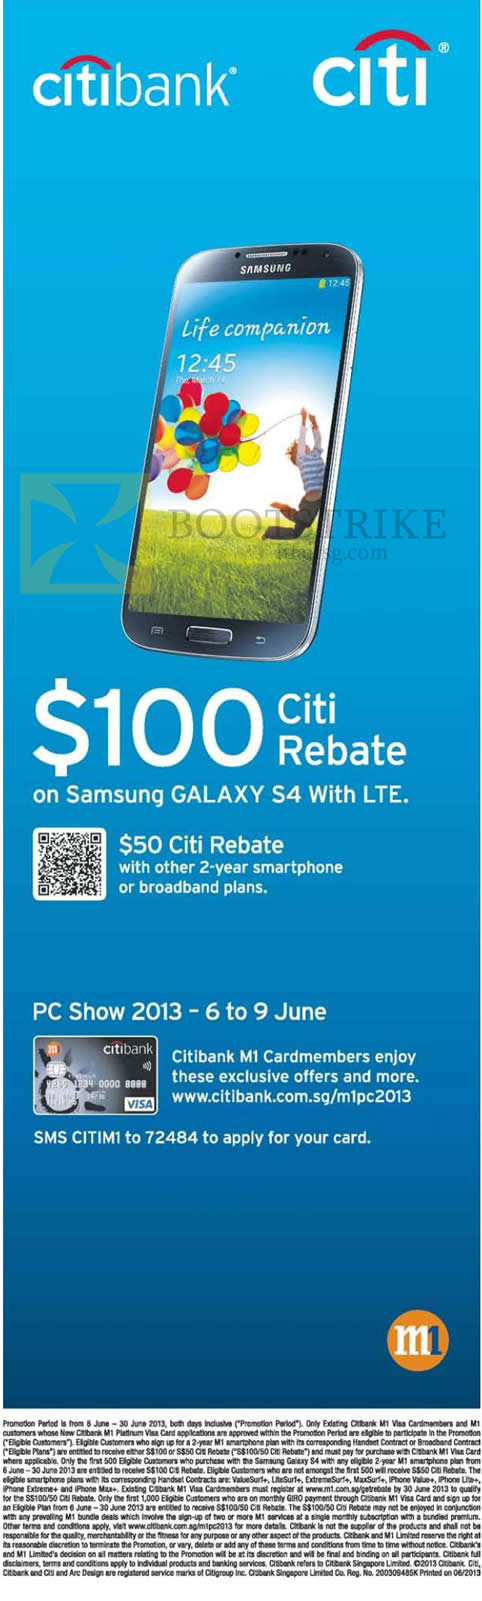 PC SHOW 2013 price list image brochure of M1 Mobile Citibank Rebates, Samsung Galaxy S4